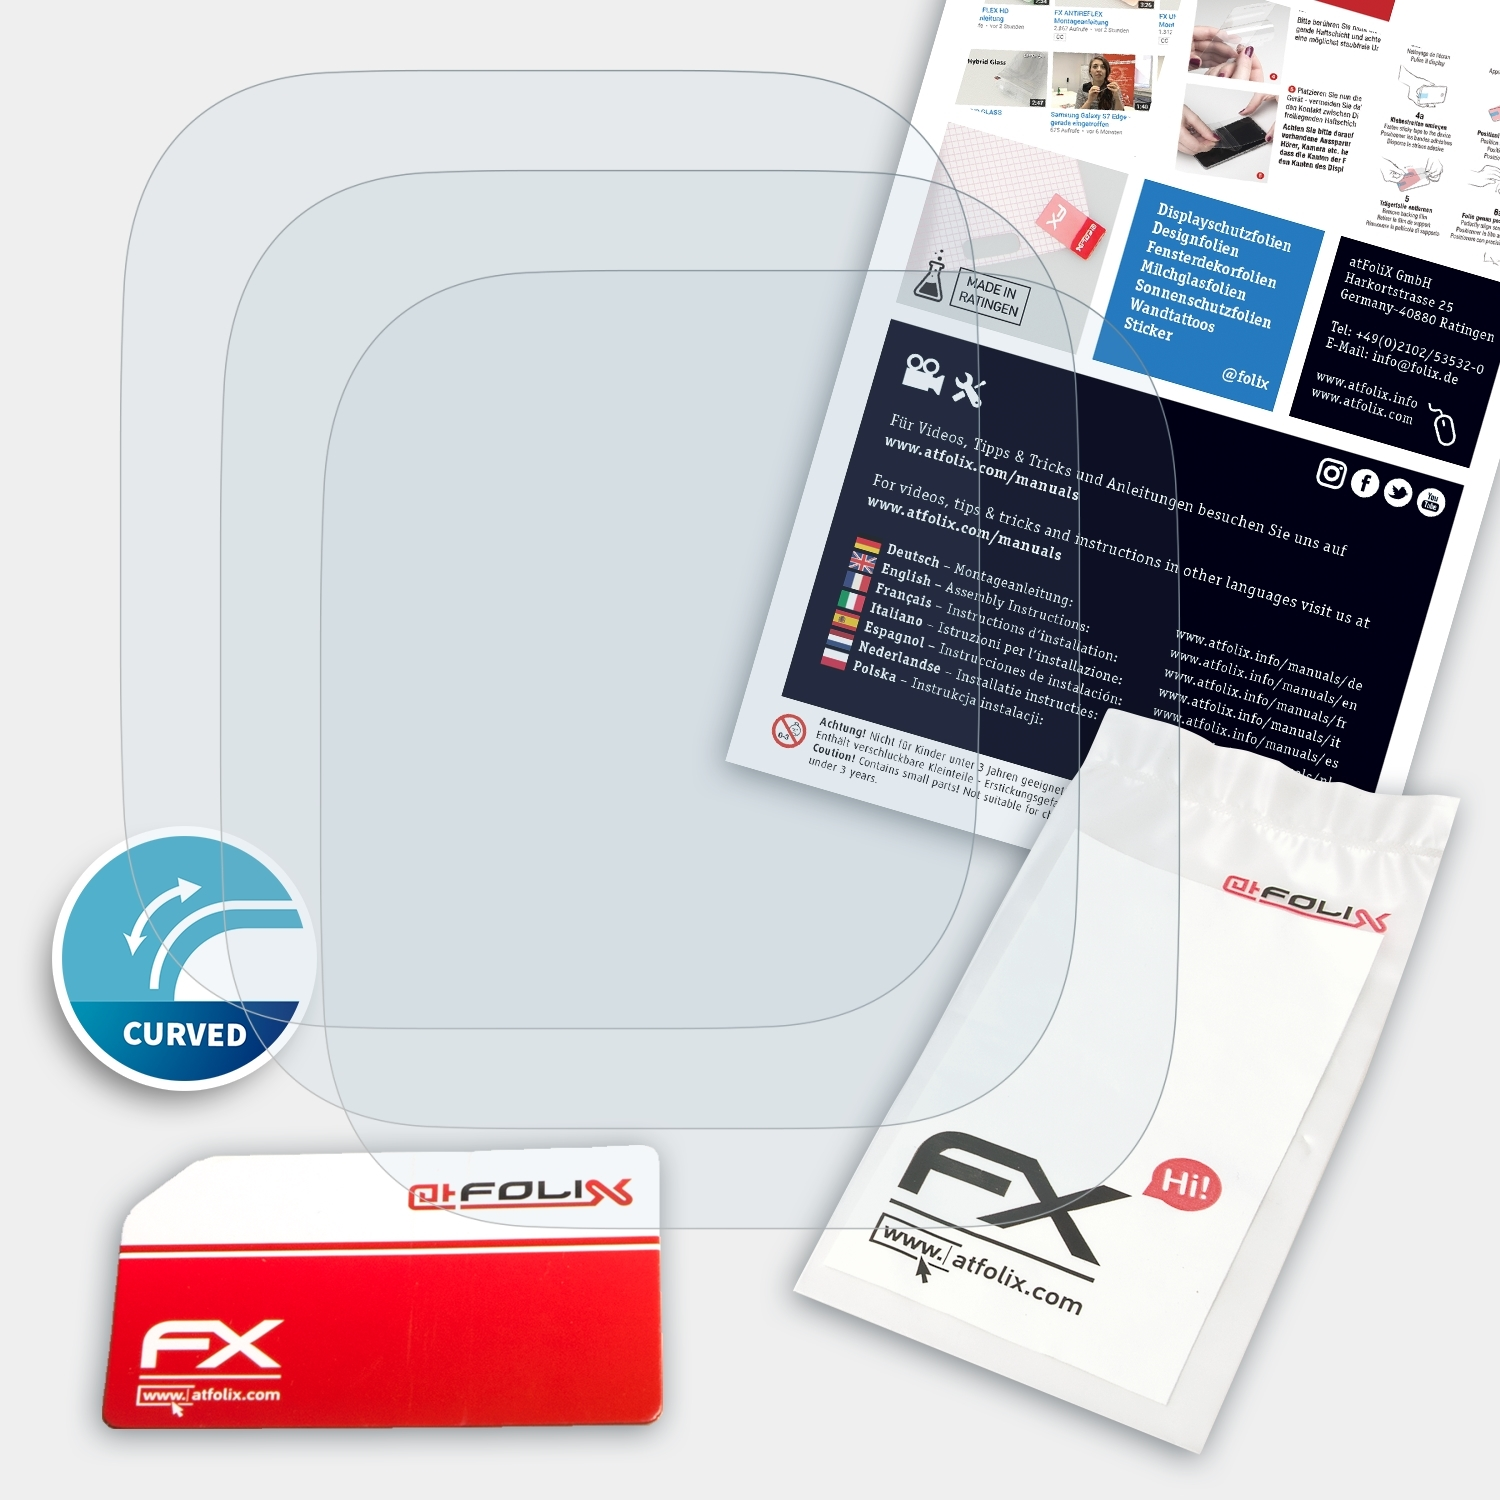 Displayschutz(für Polar 3x ATFOLIX A300) FX-ActiFleX